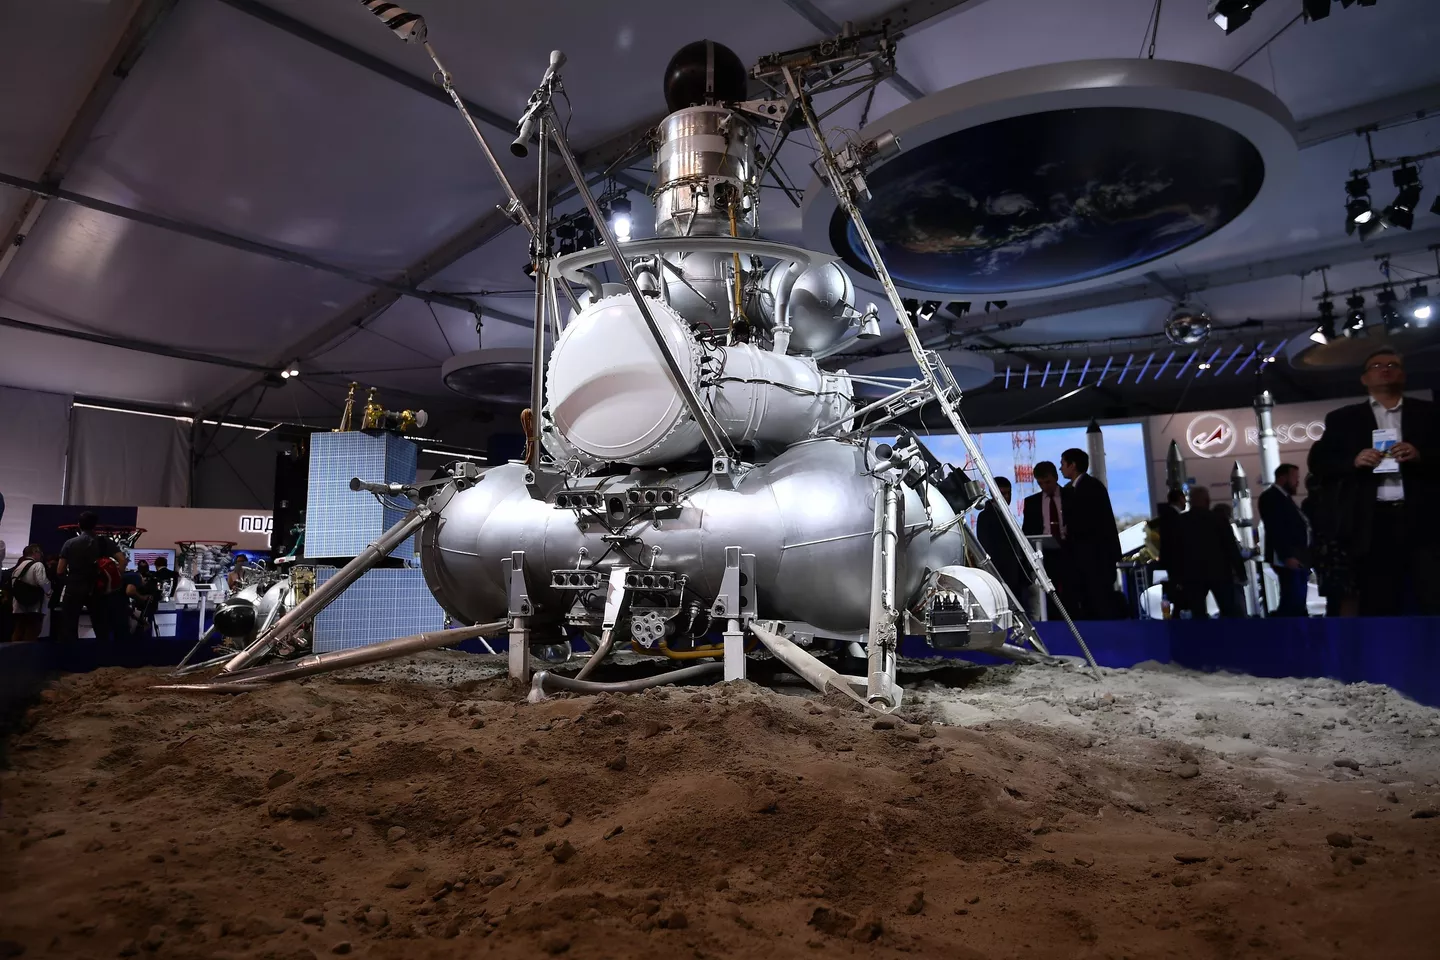 Космический аппарат Луна - 24 на Международном авиационно-космическом салоне МАКС-2017